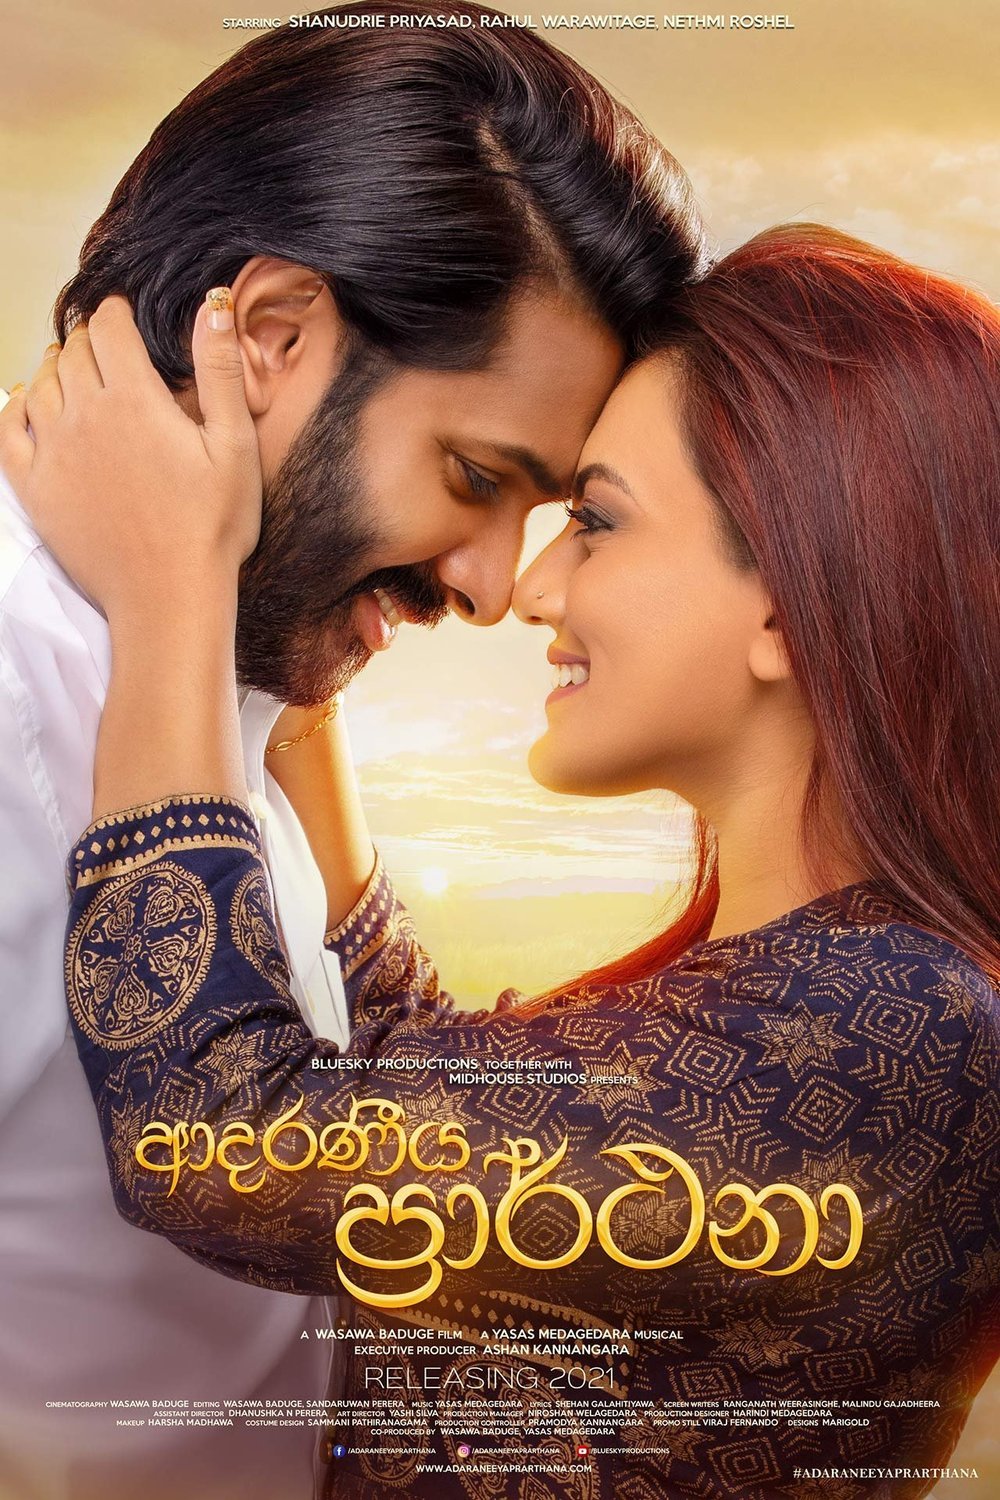 Sinhala poster of the movie Adaraneeya Prarthana